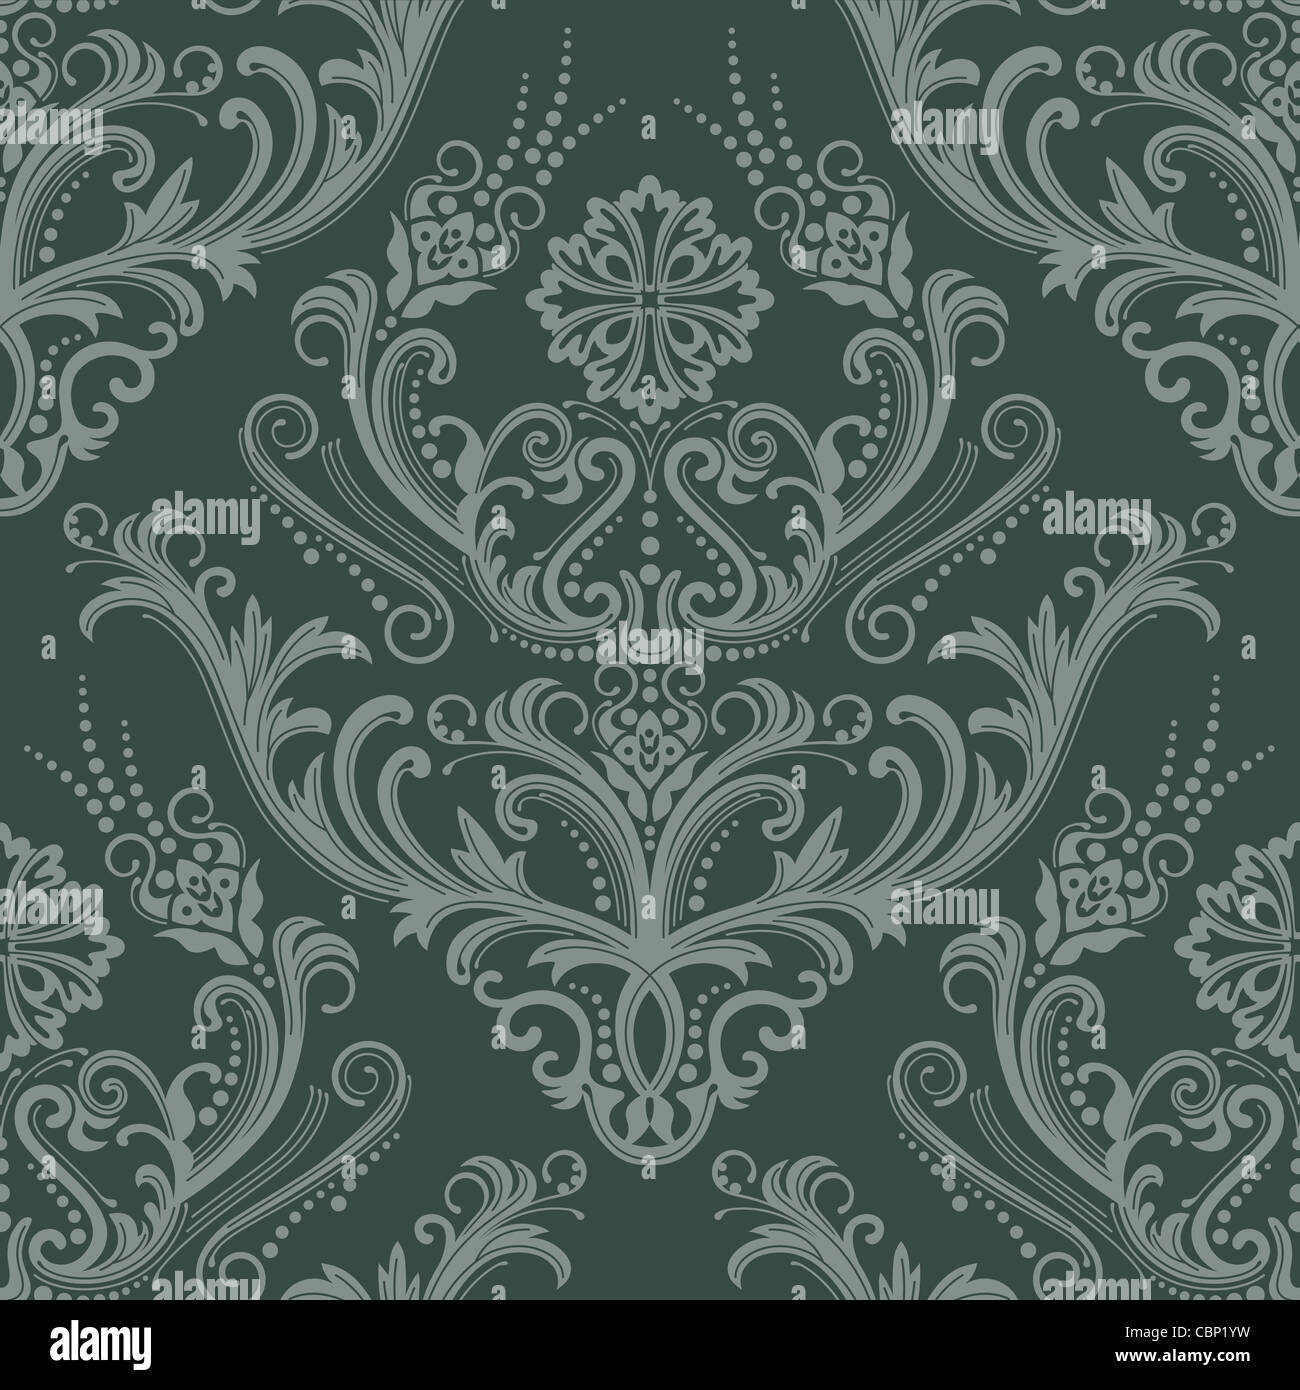 Download Classic Green Damask Pattern Wallpaper | Wallpapers.com